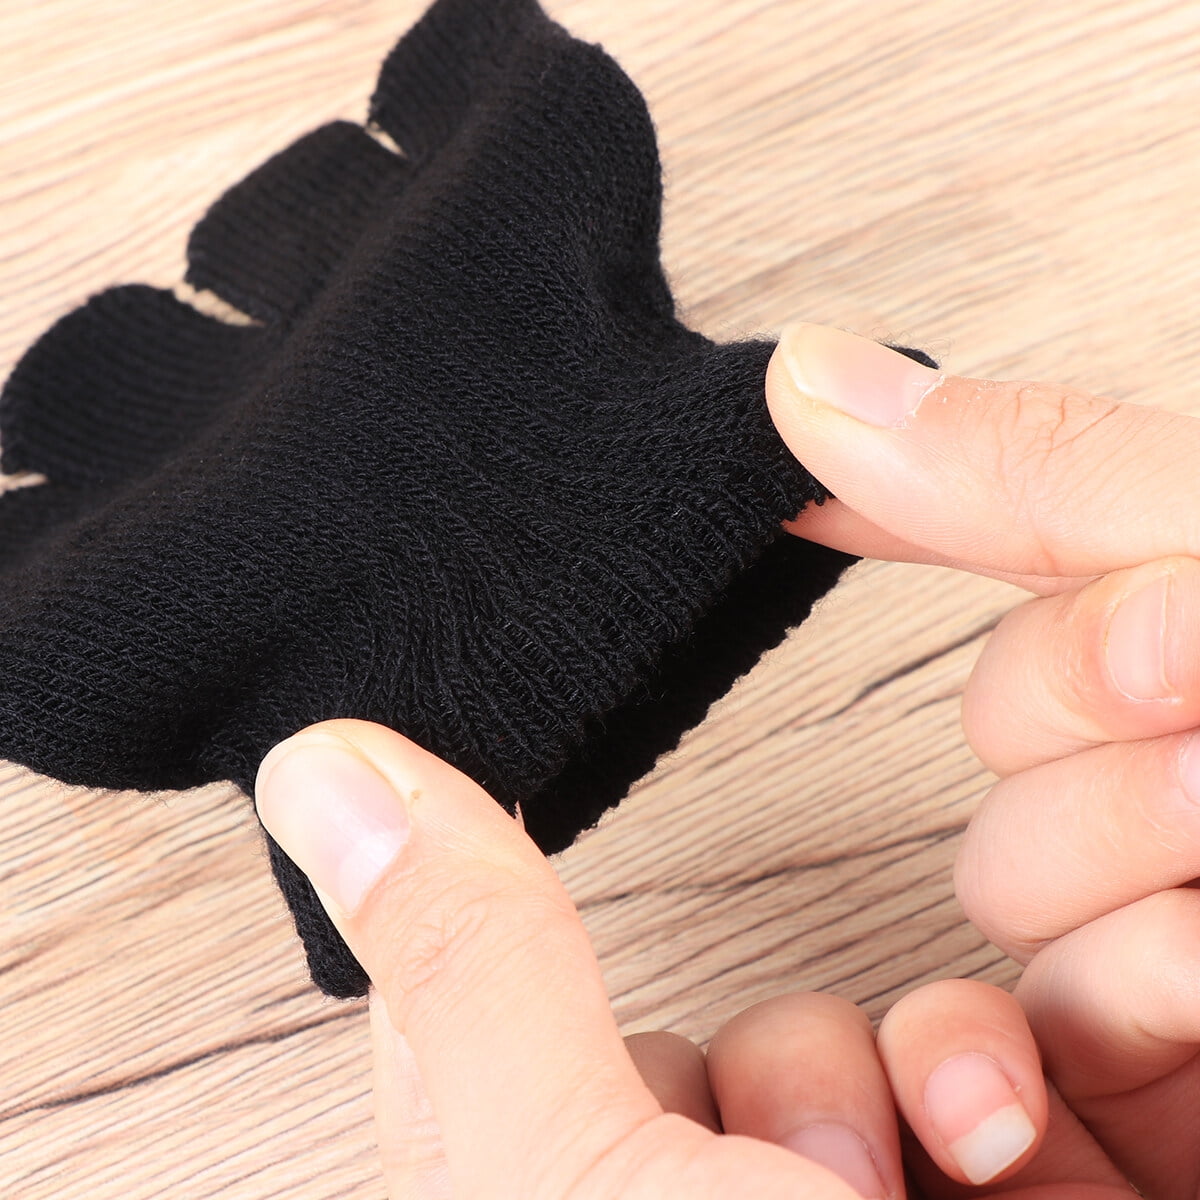 Teknika conductive-thread gloves: Knitty Winter bis 2011